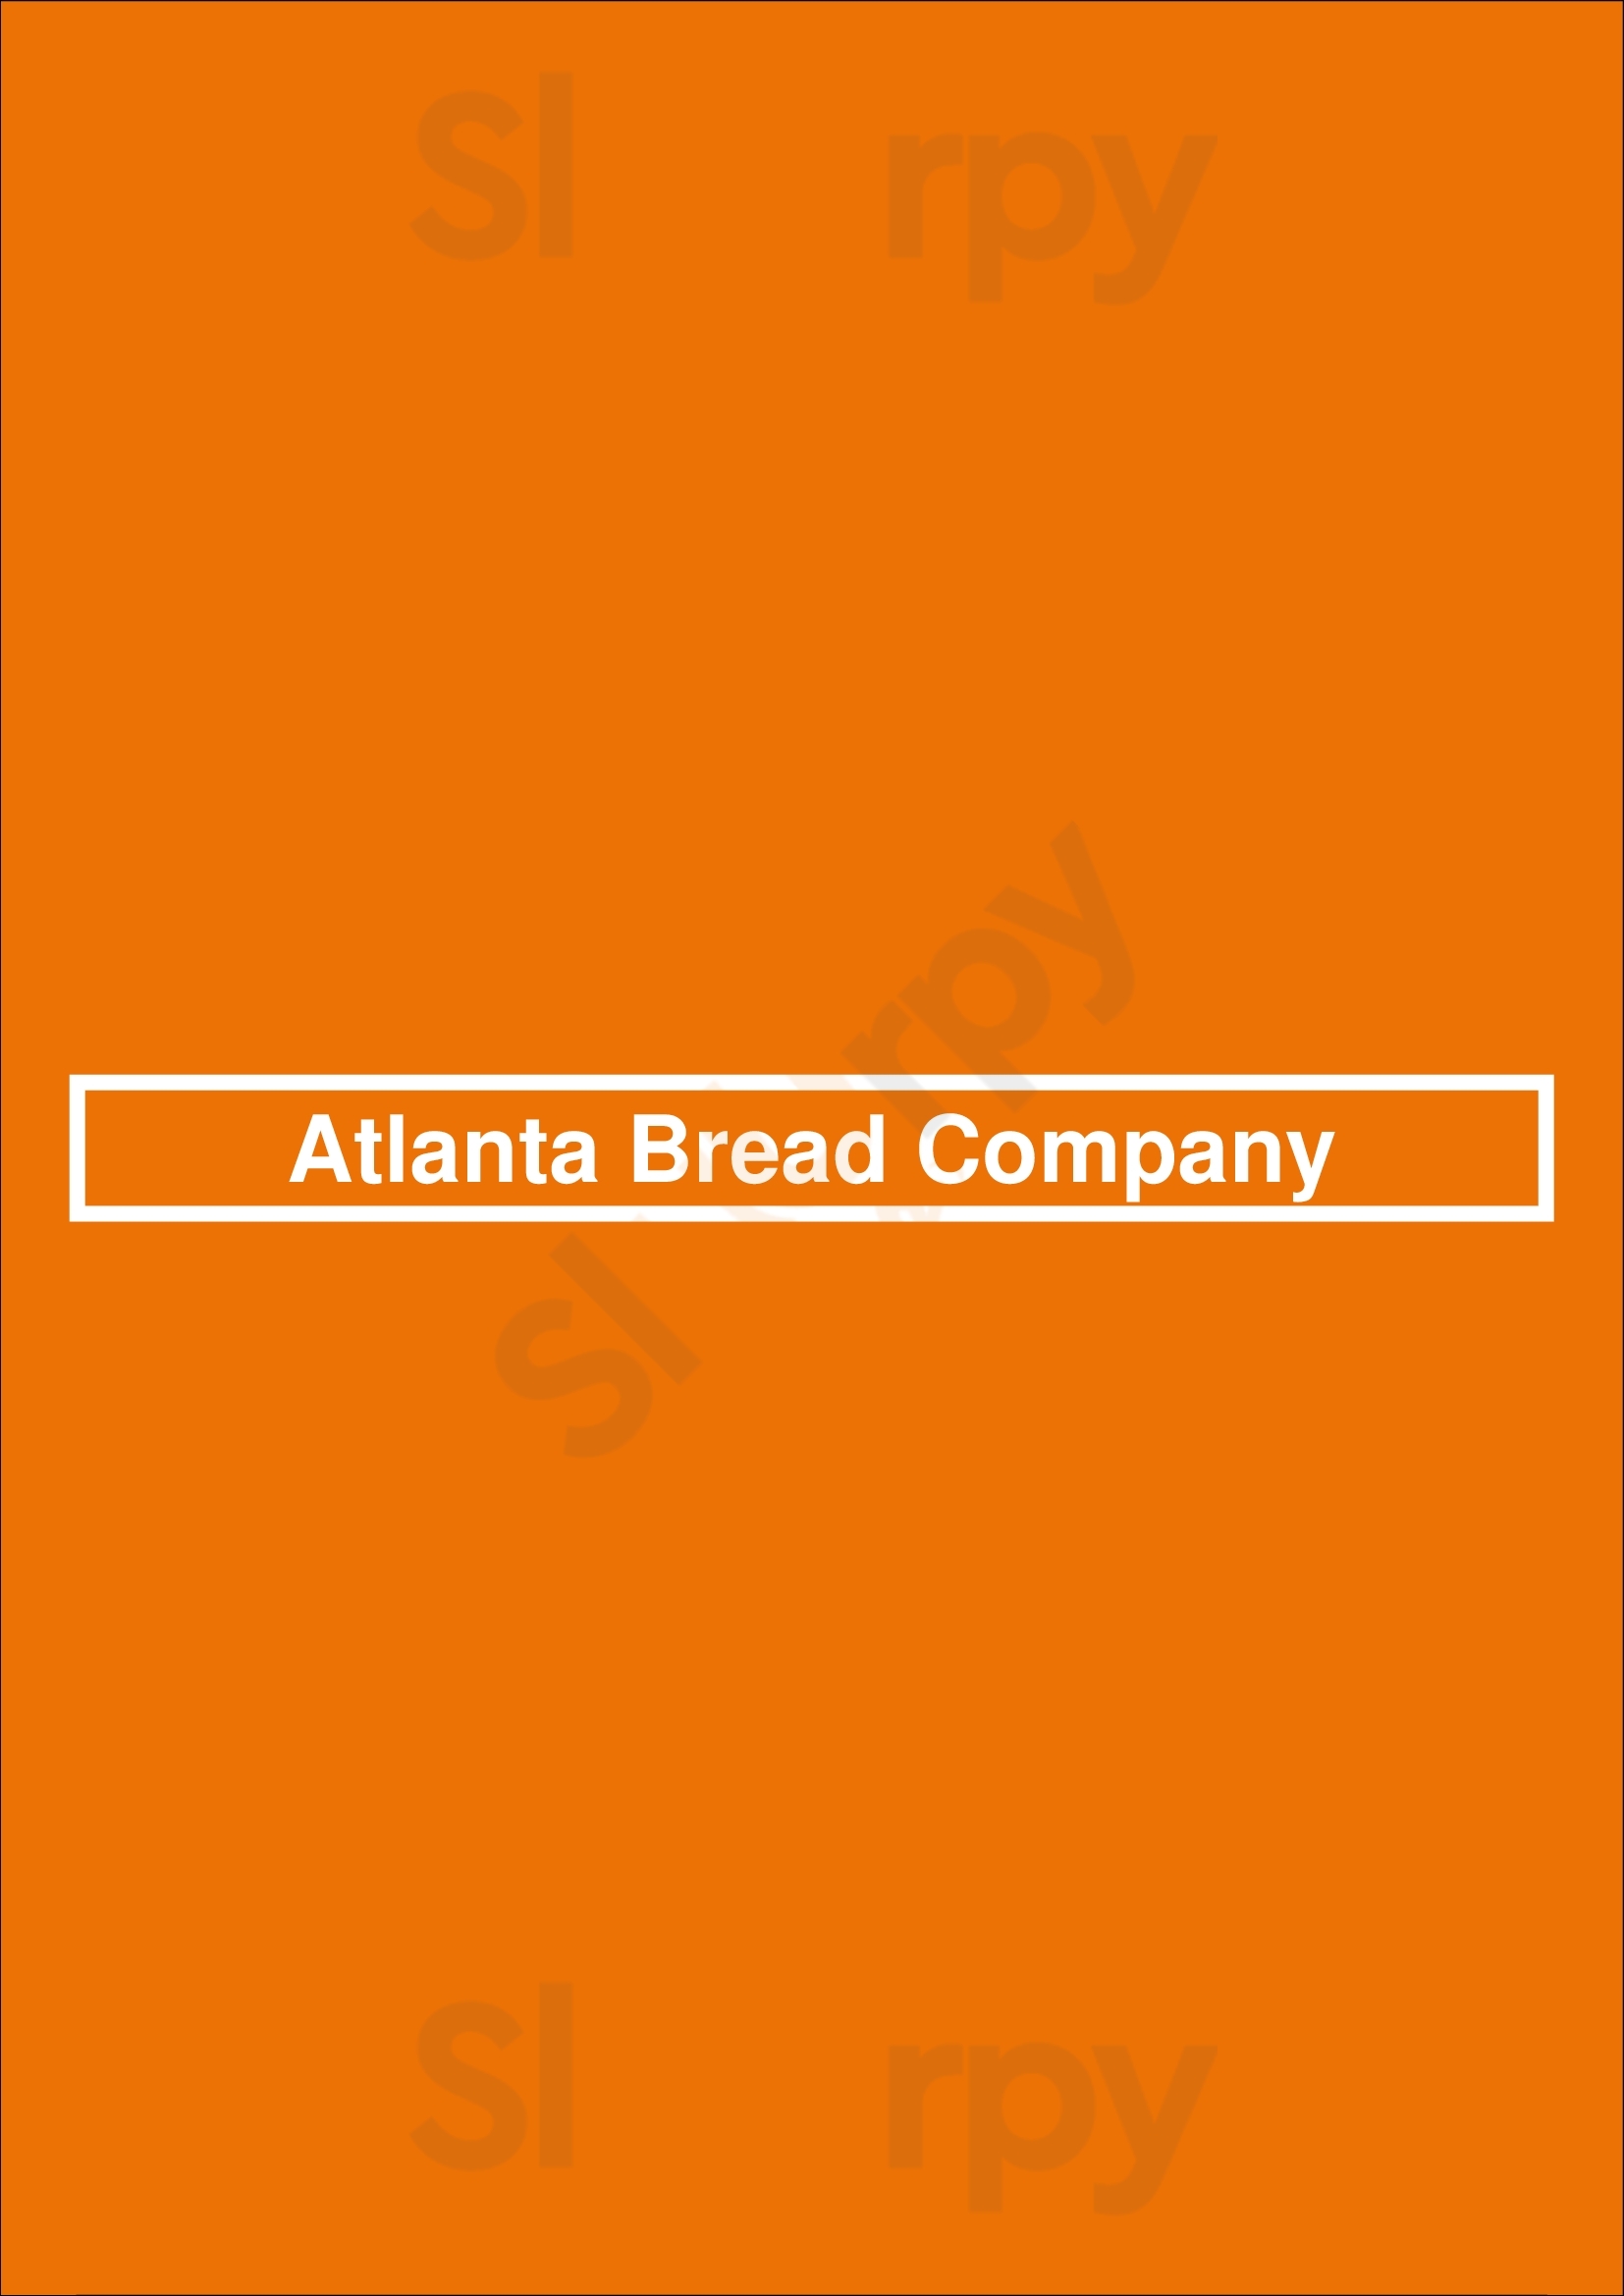 Atlanta Bread Company Smyrna Menu - 1